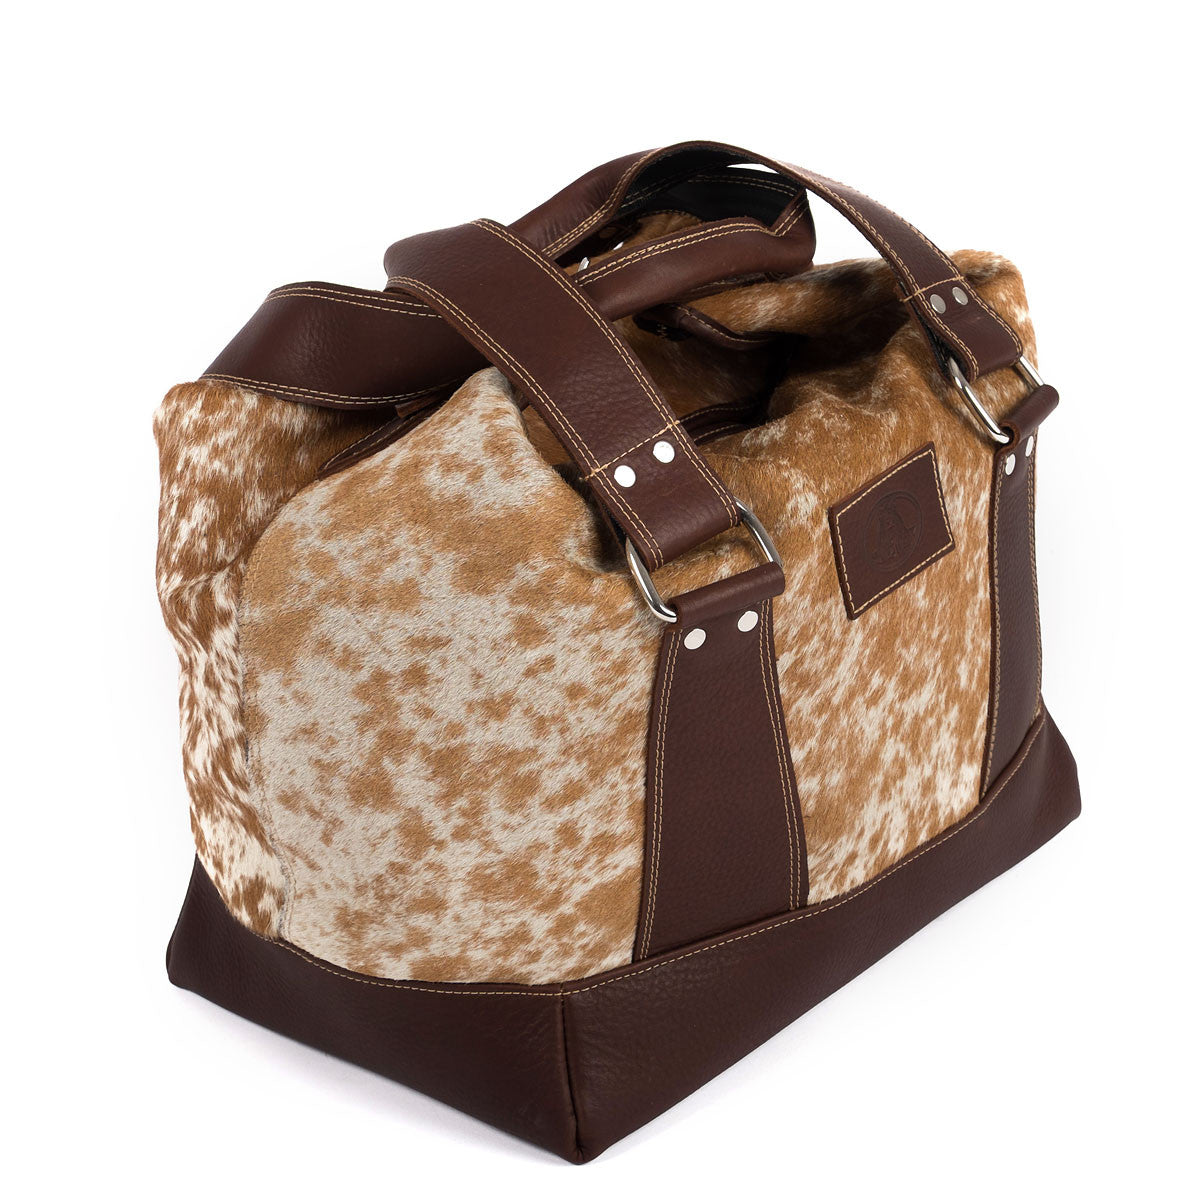 NEW Genuine Australian Leather Thomas Bag - Rawhide - Brown and white | eBay